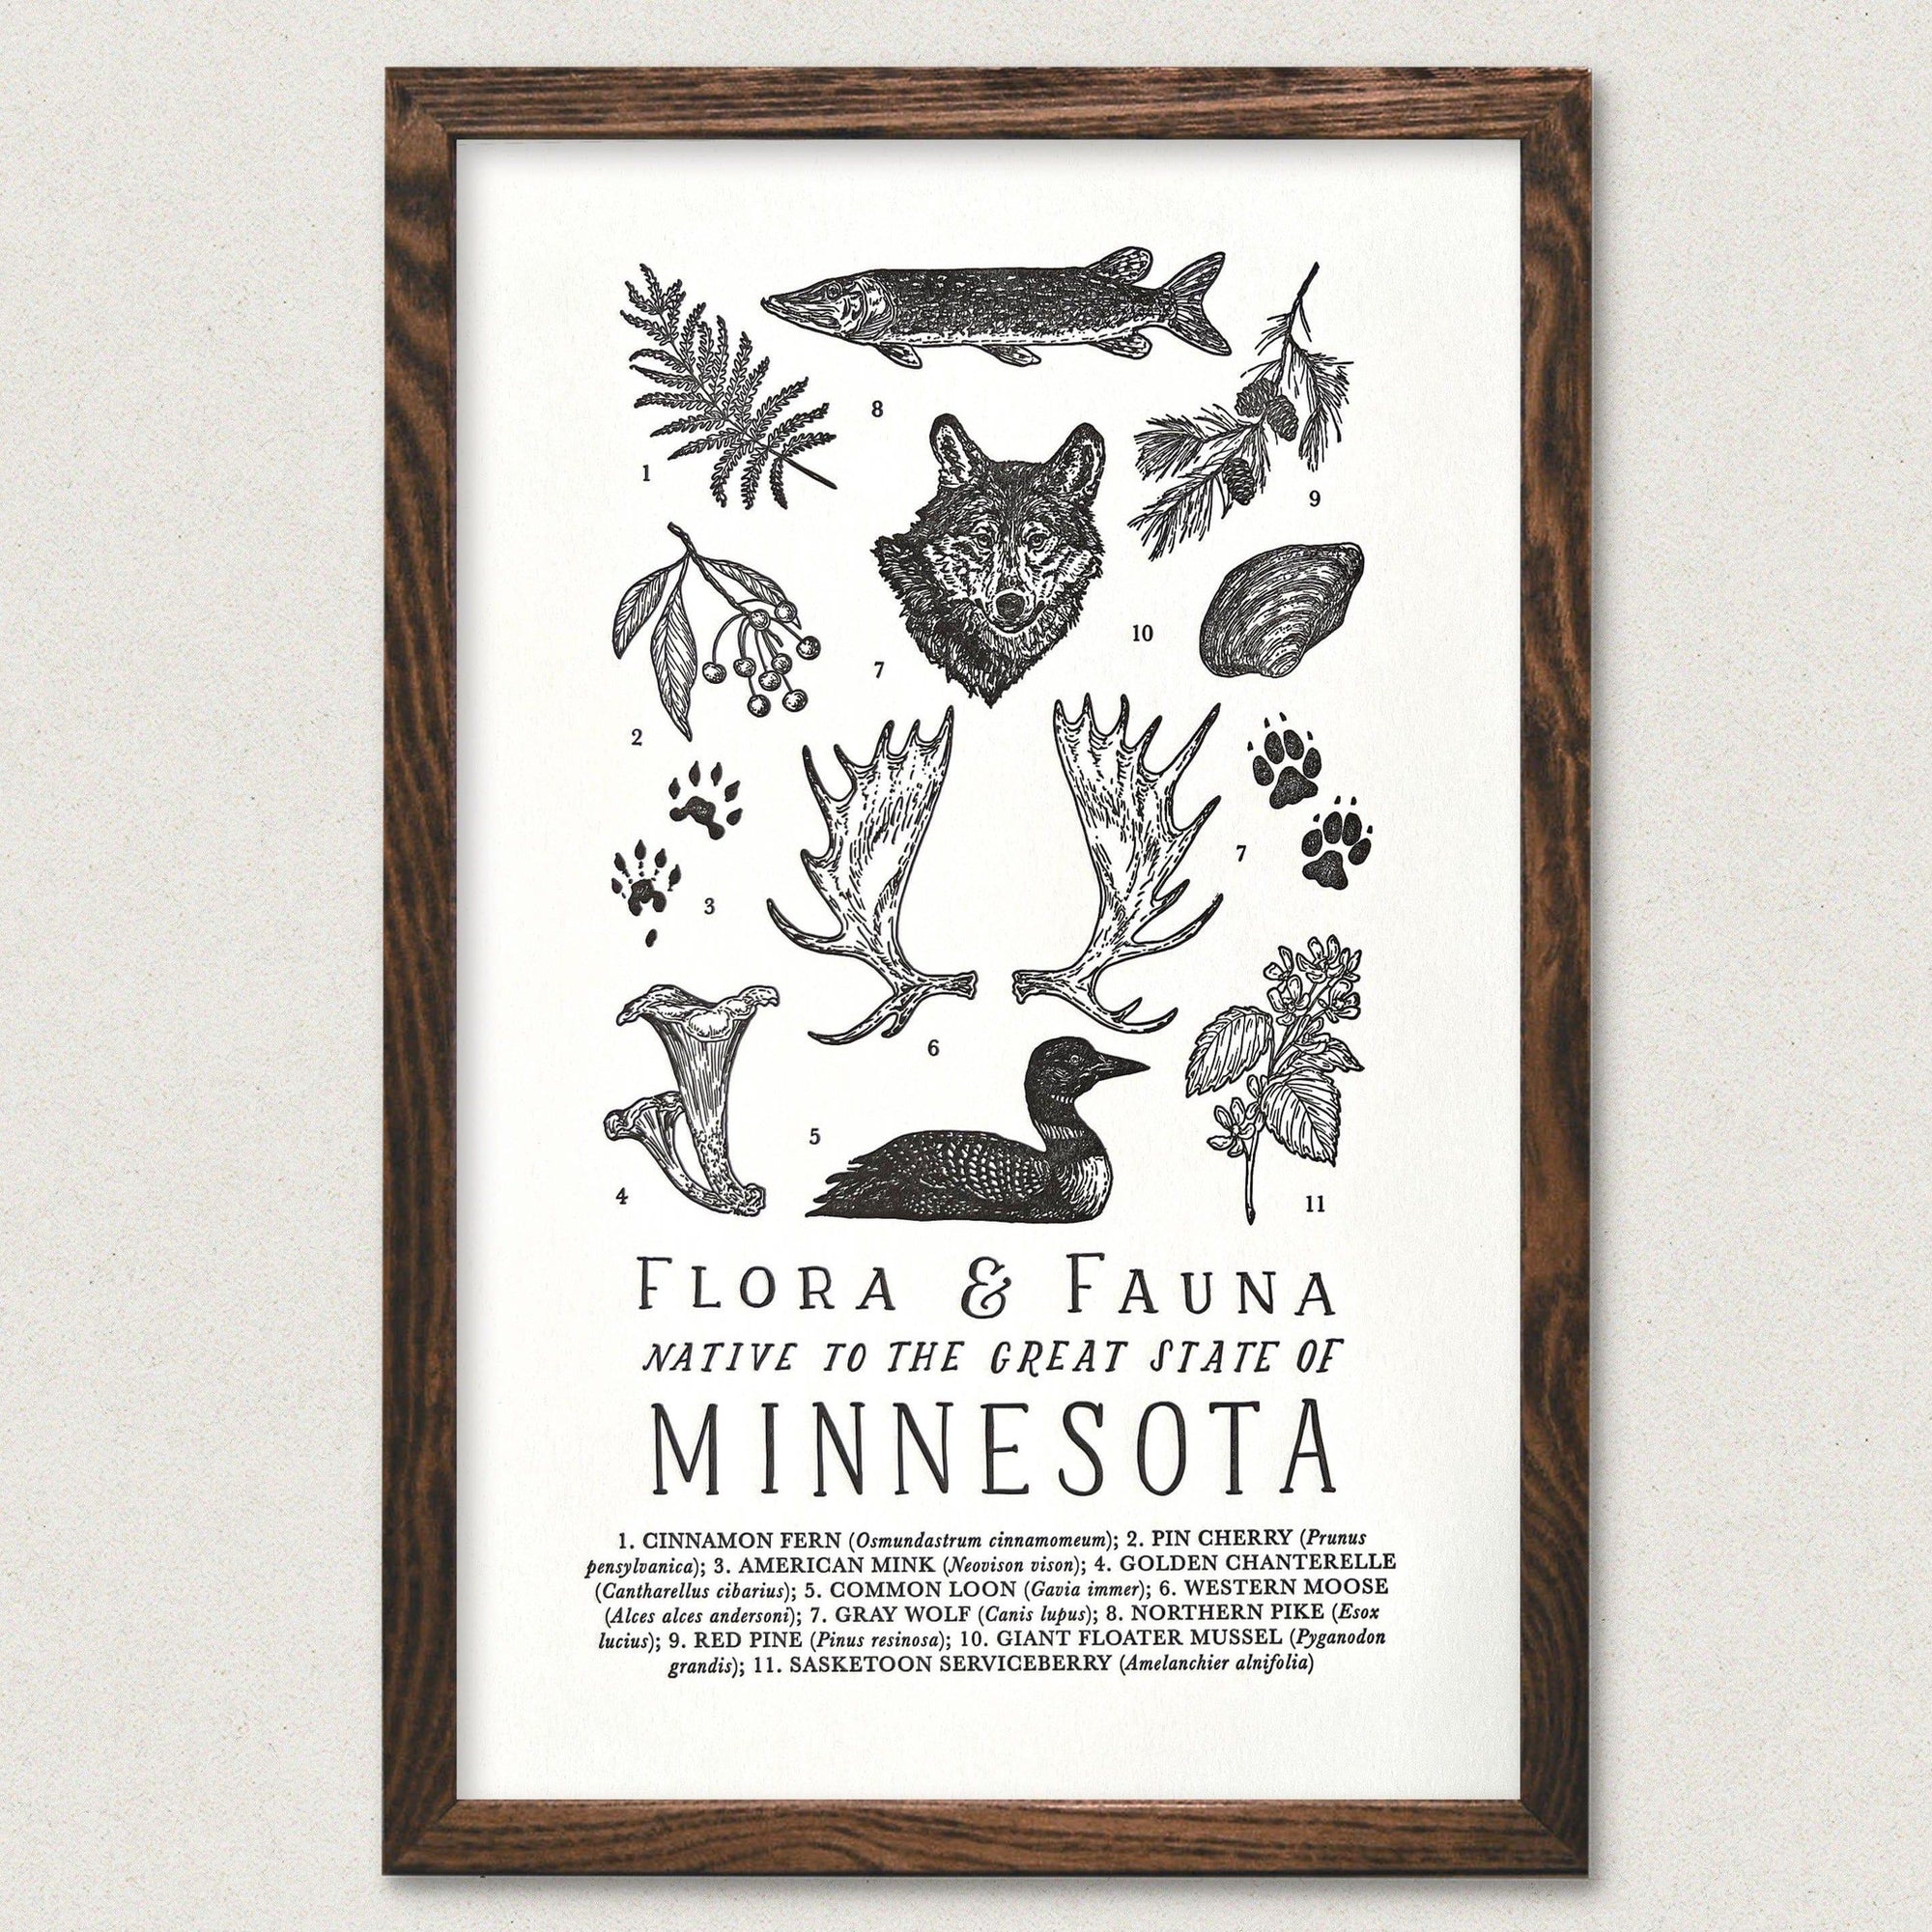 An art print of Minnesota's fauna and flora, featuring The Wild Wander's Minnesota Field Guide Letterpress Print.